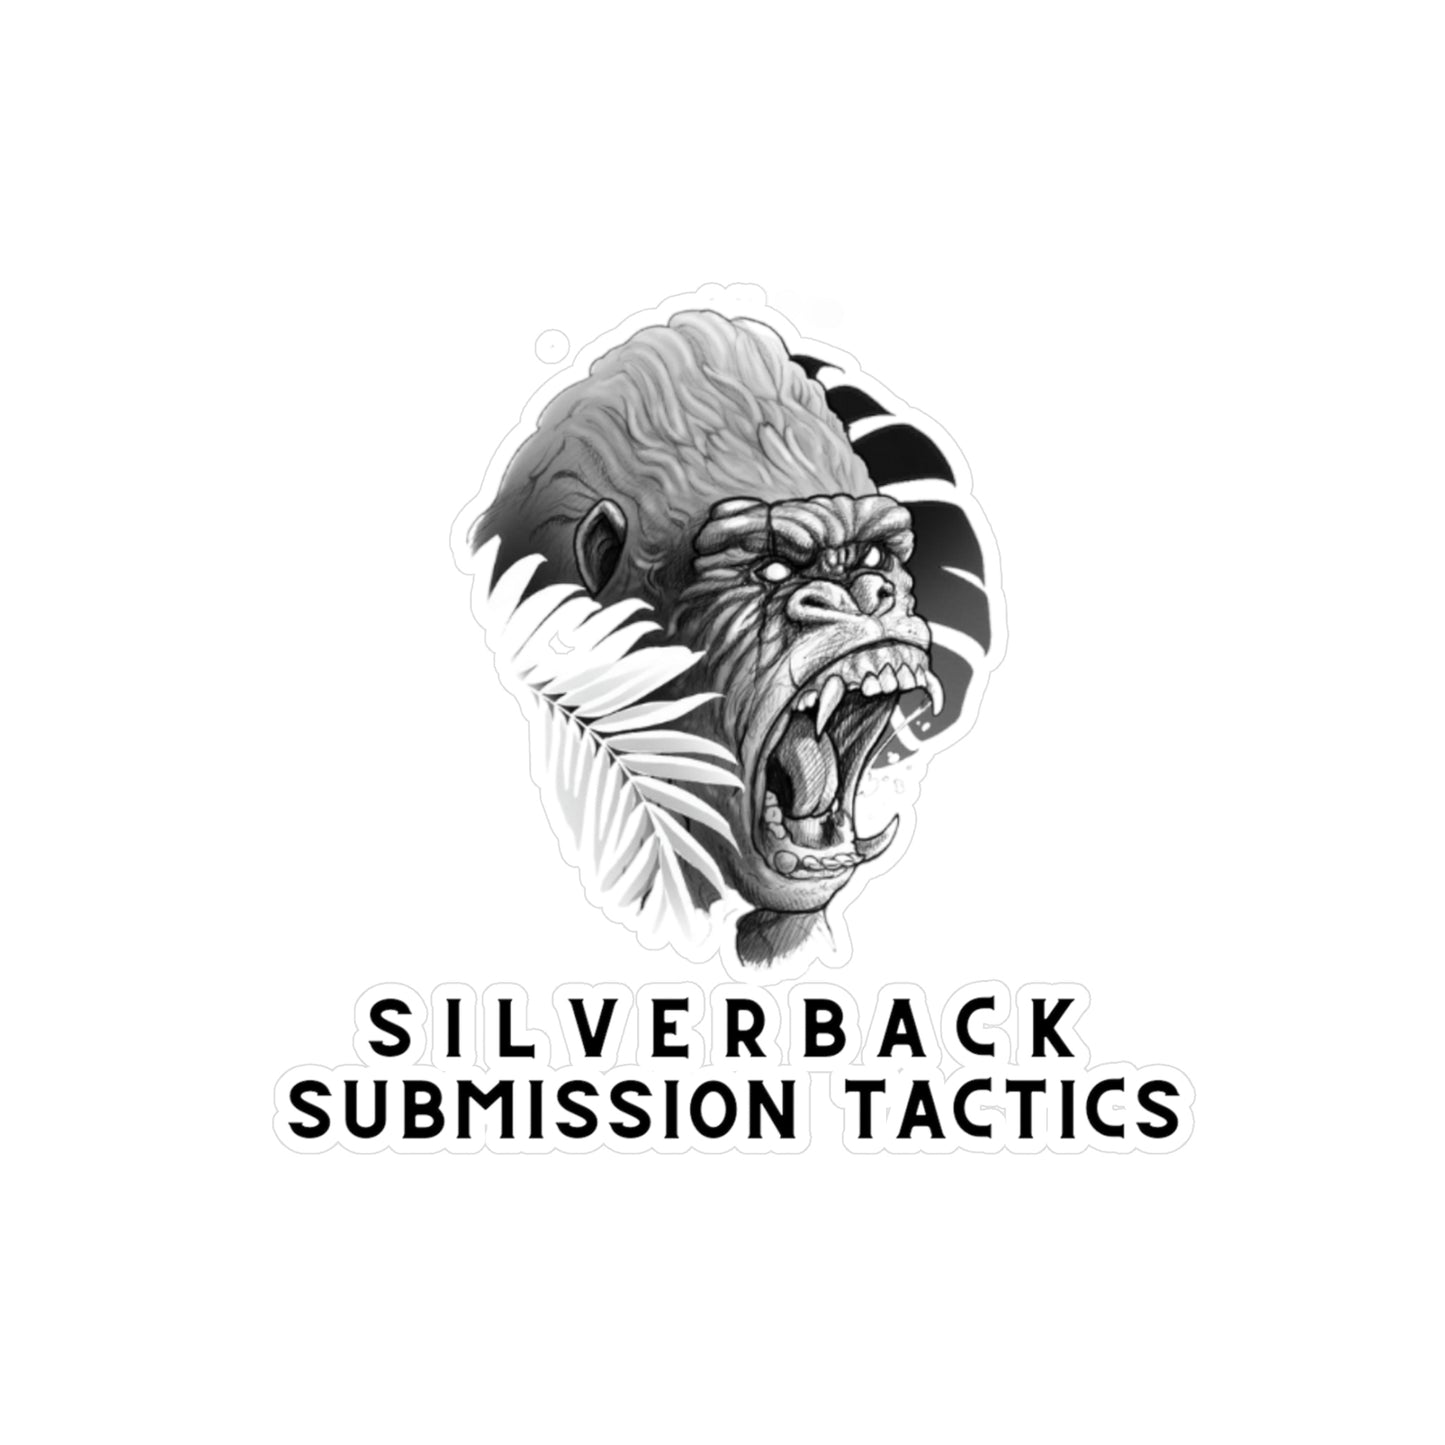 Vinyl Die-Cut Silverback Submission Tactics Sticker